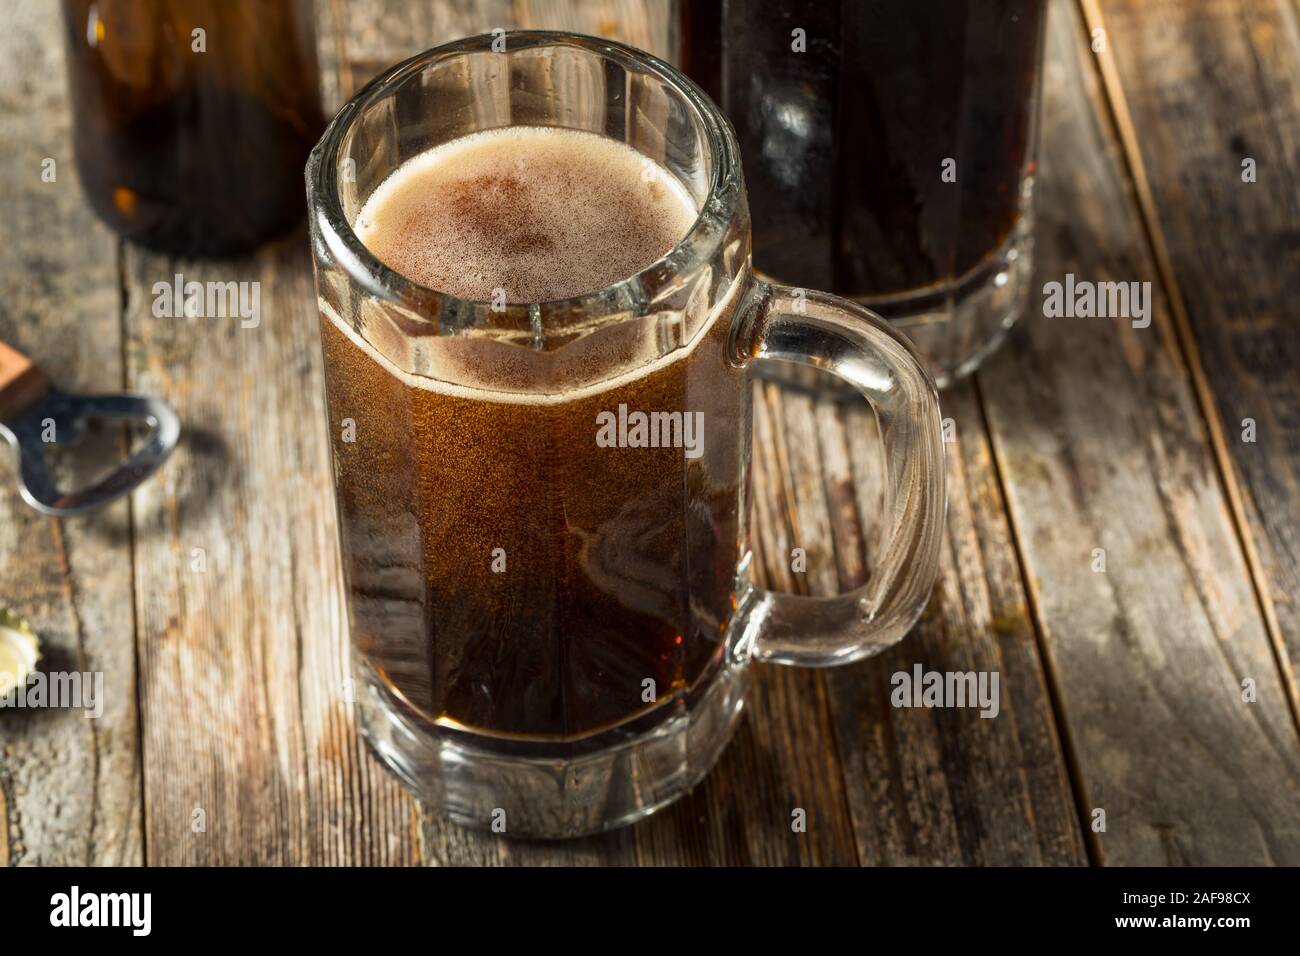 Homemade Birch Beer Drink in a Mug Stock Photo